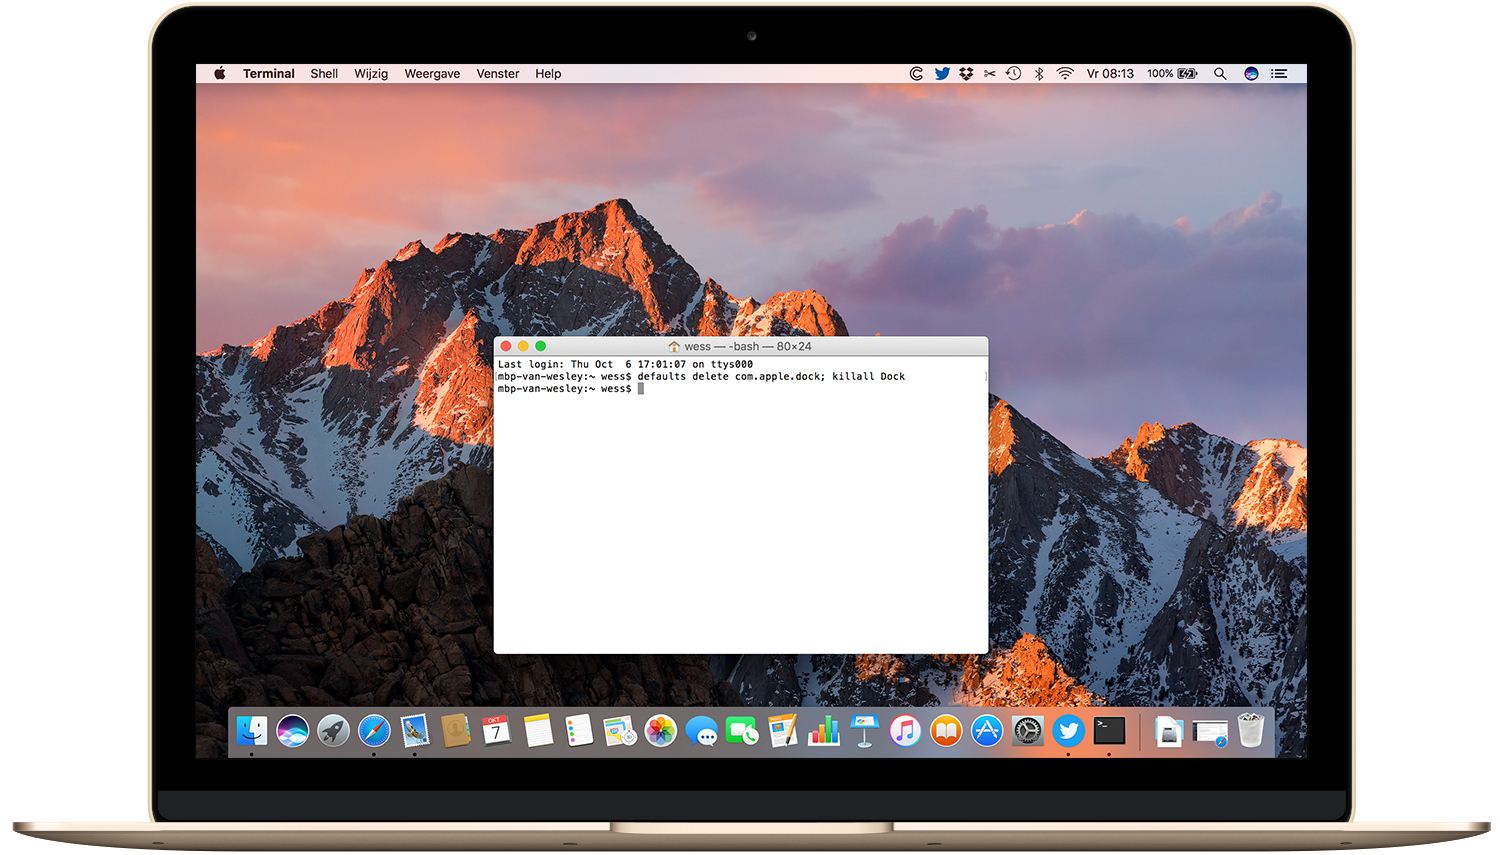 best mac os dock for windows 10